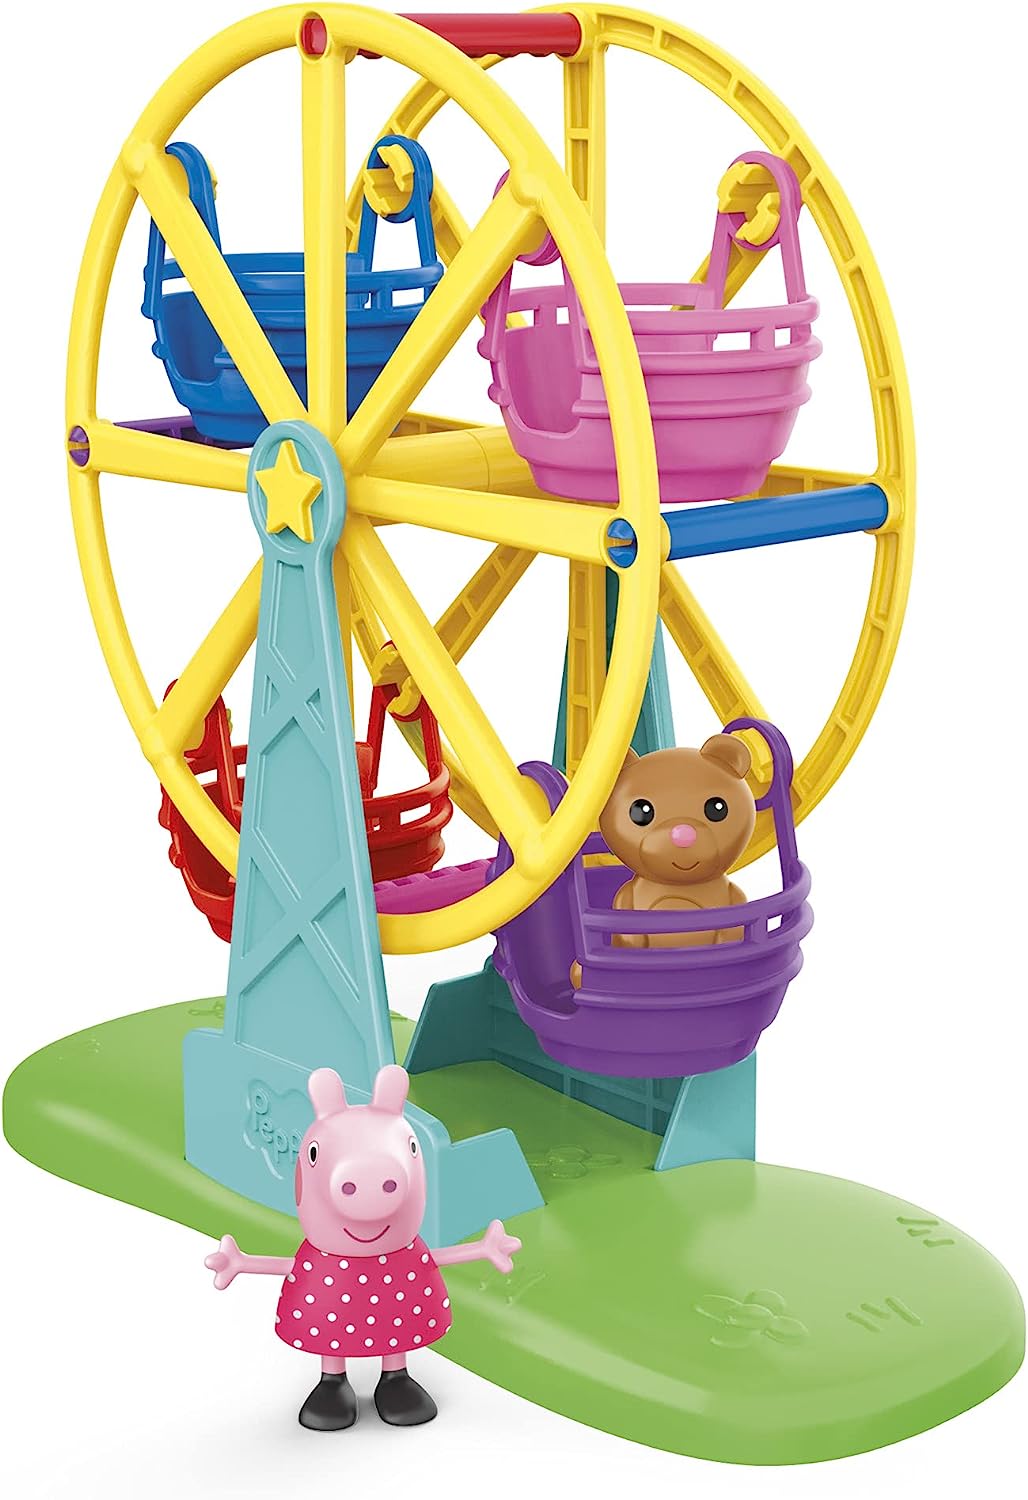 Peppa Pig ペッパピッグ アメリカ直輸入 おもちゃ Peppa Pig Adventures, Ferris Wheel Playset Preschool Toy Figure and Accessory for Kids Ages 3 and UpPeppa Pig ペッパピッグ アメリカ直輸入 おもちゃ 2